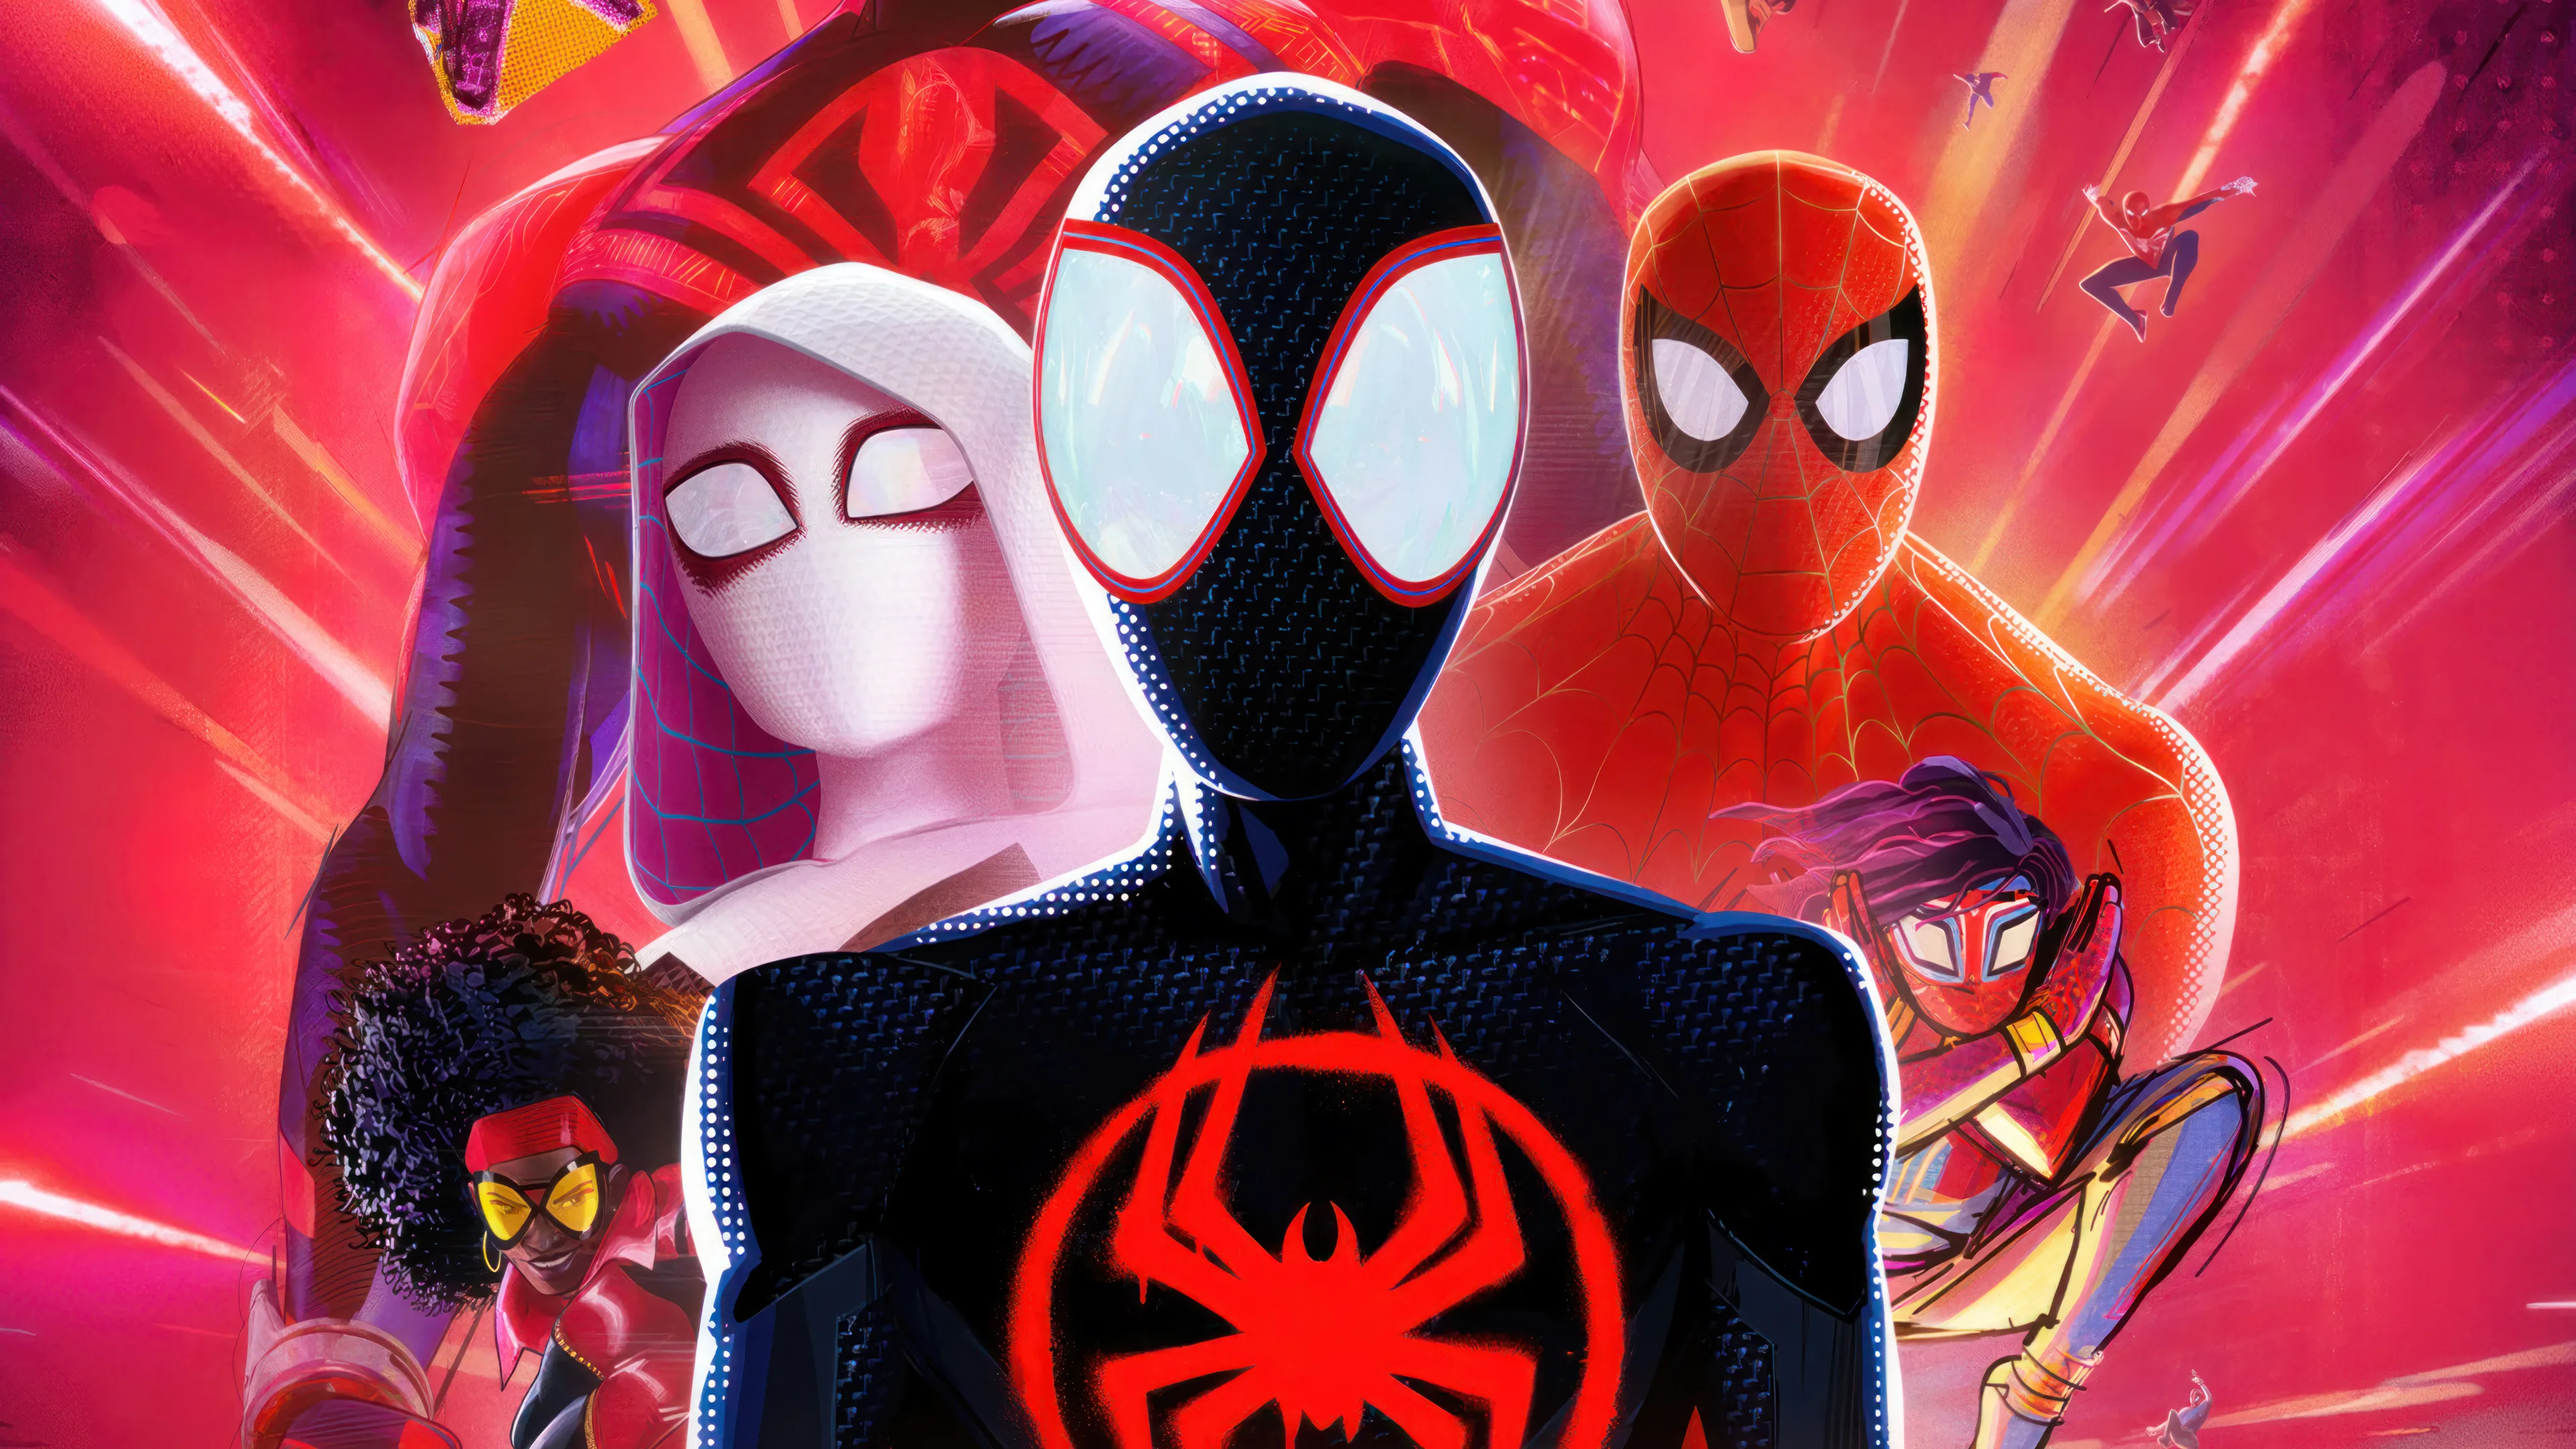 https://www.pixground.com/wp-content/uploads/2023/06/Spider-Man-Across-the-Spider-Verse-Characters-4K-Wallpaper-jpg.webp